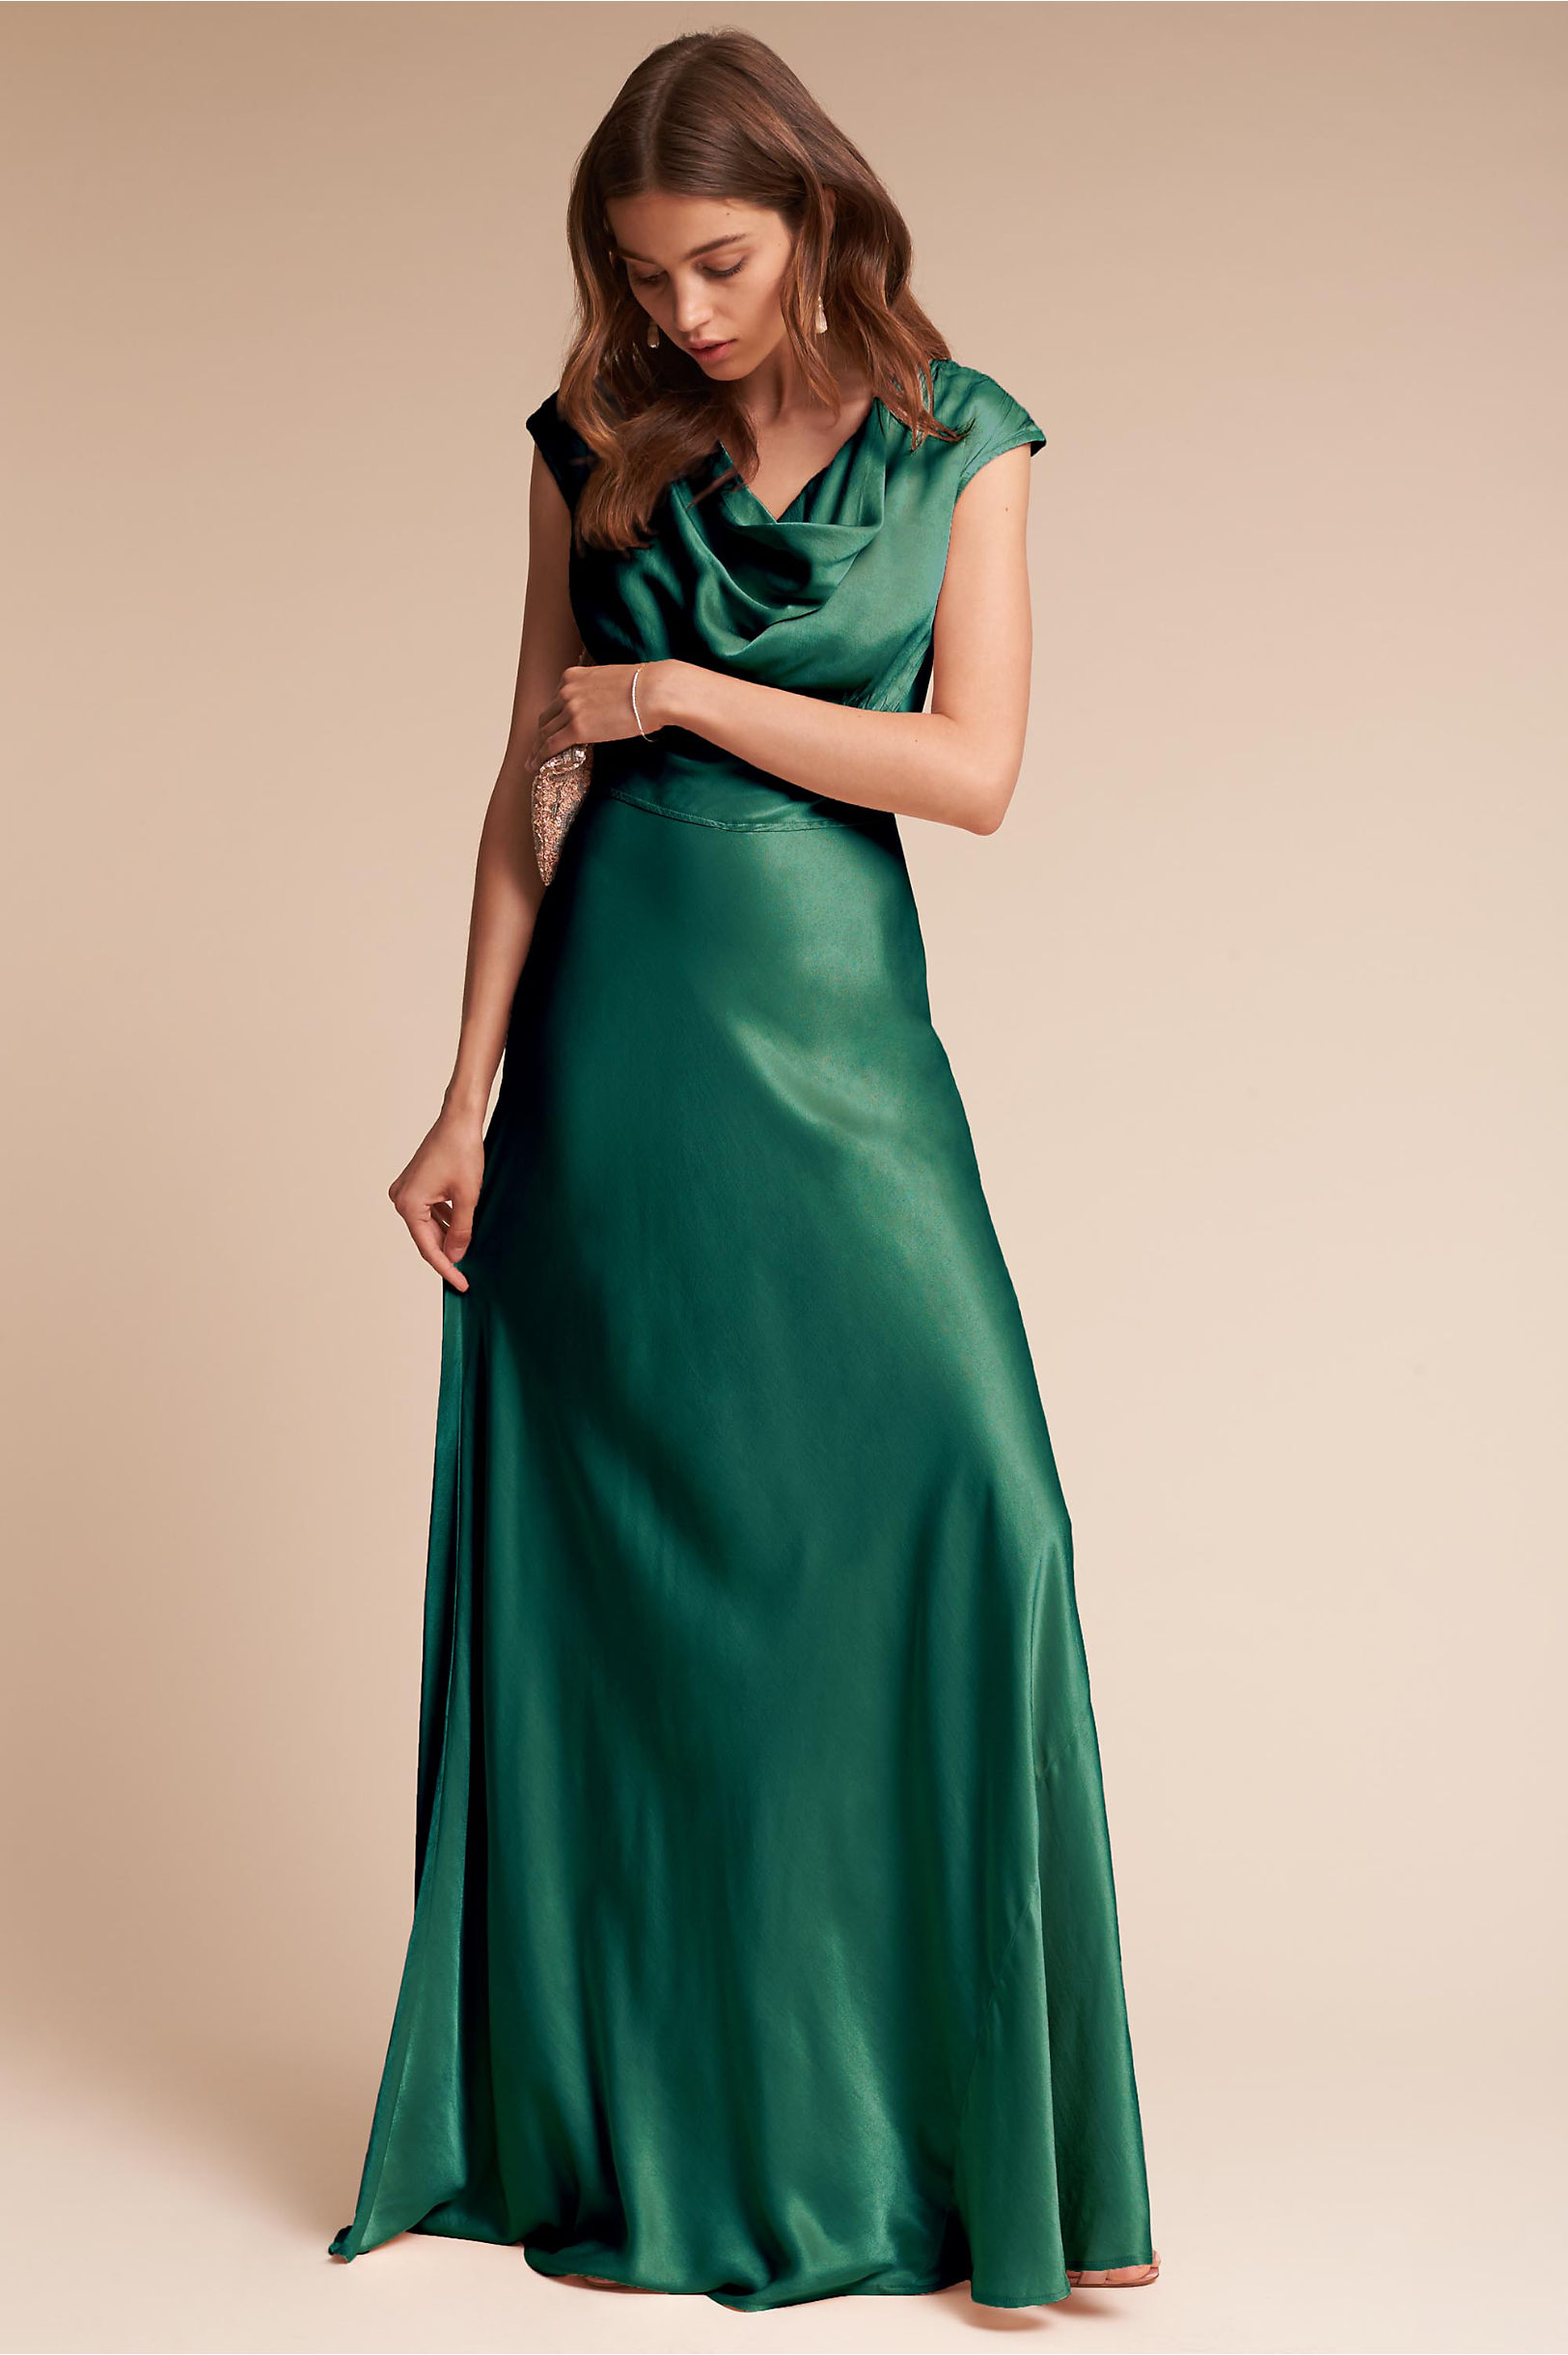 Gloss Dress in Emerald Sea